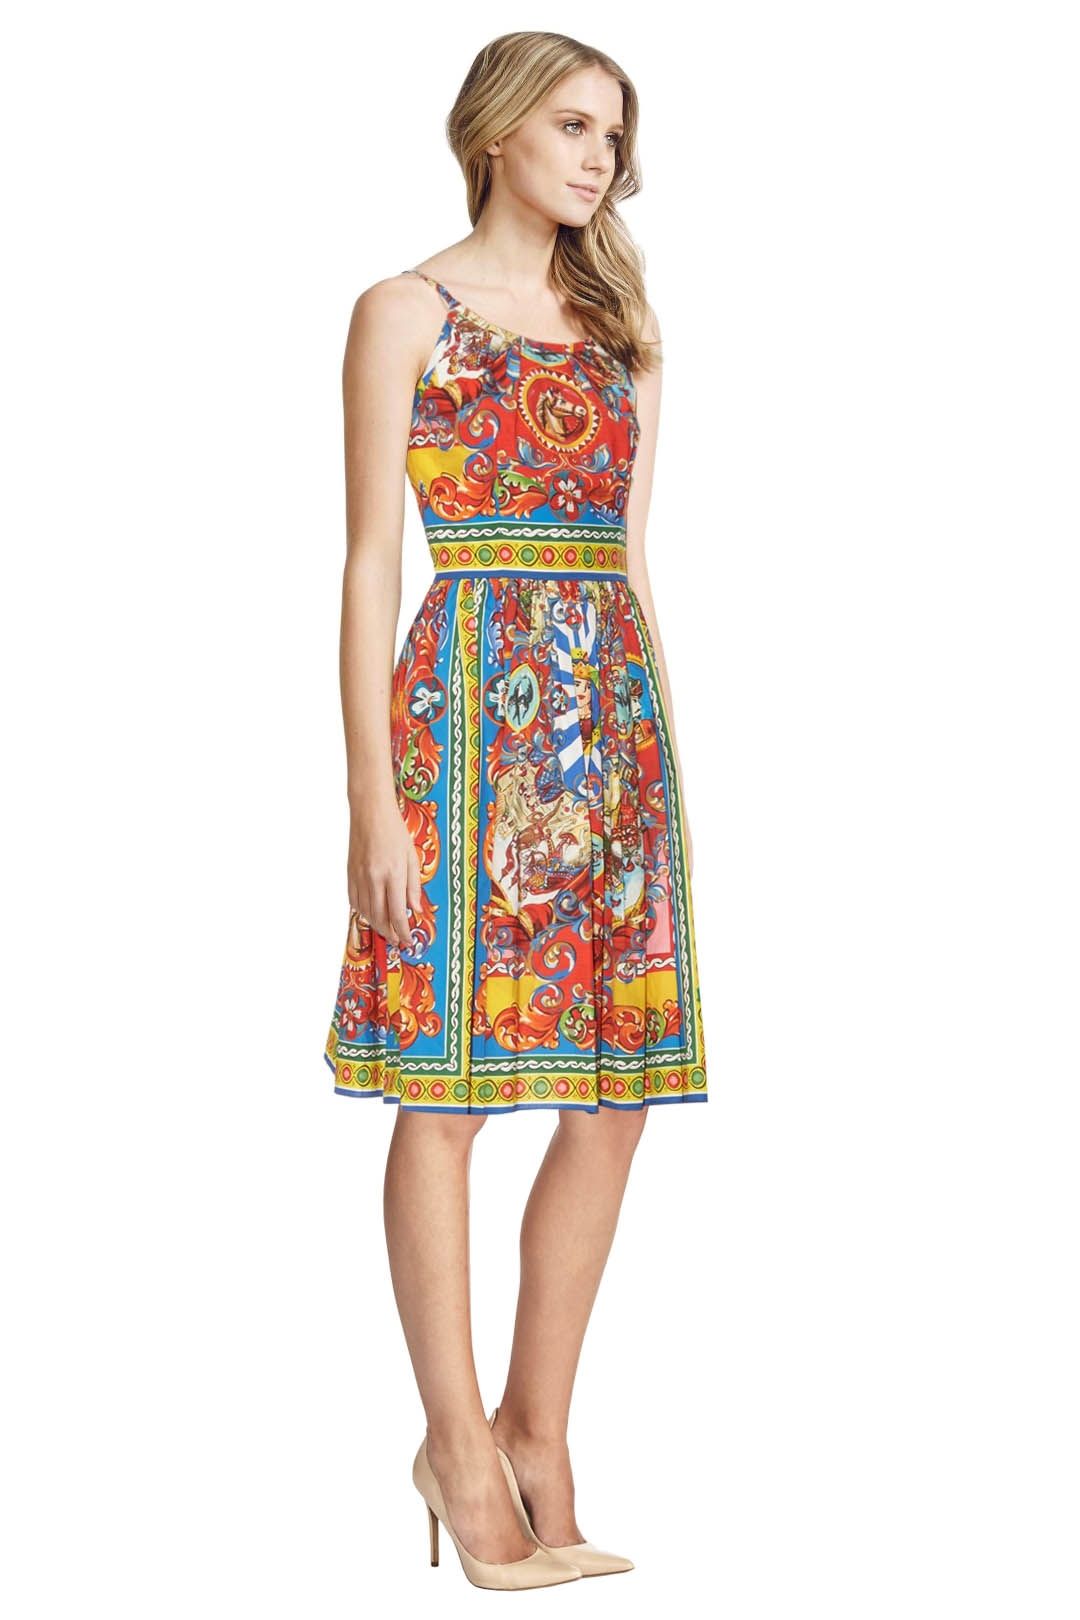 Dolce & Gabbana - Carretto Print Sleeveless Dress - Prints - Side